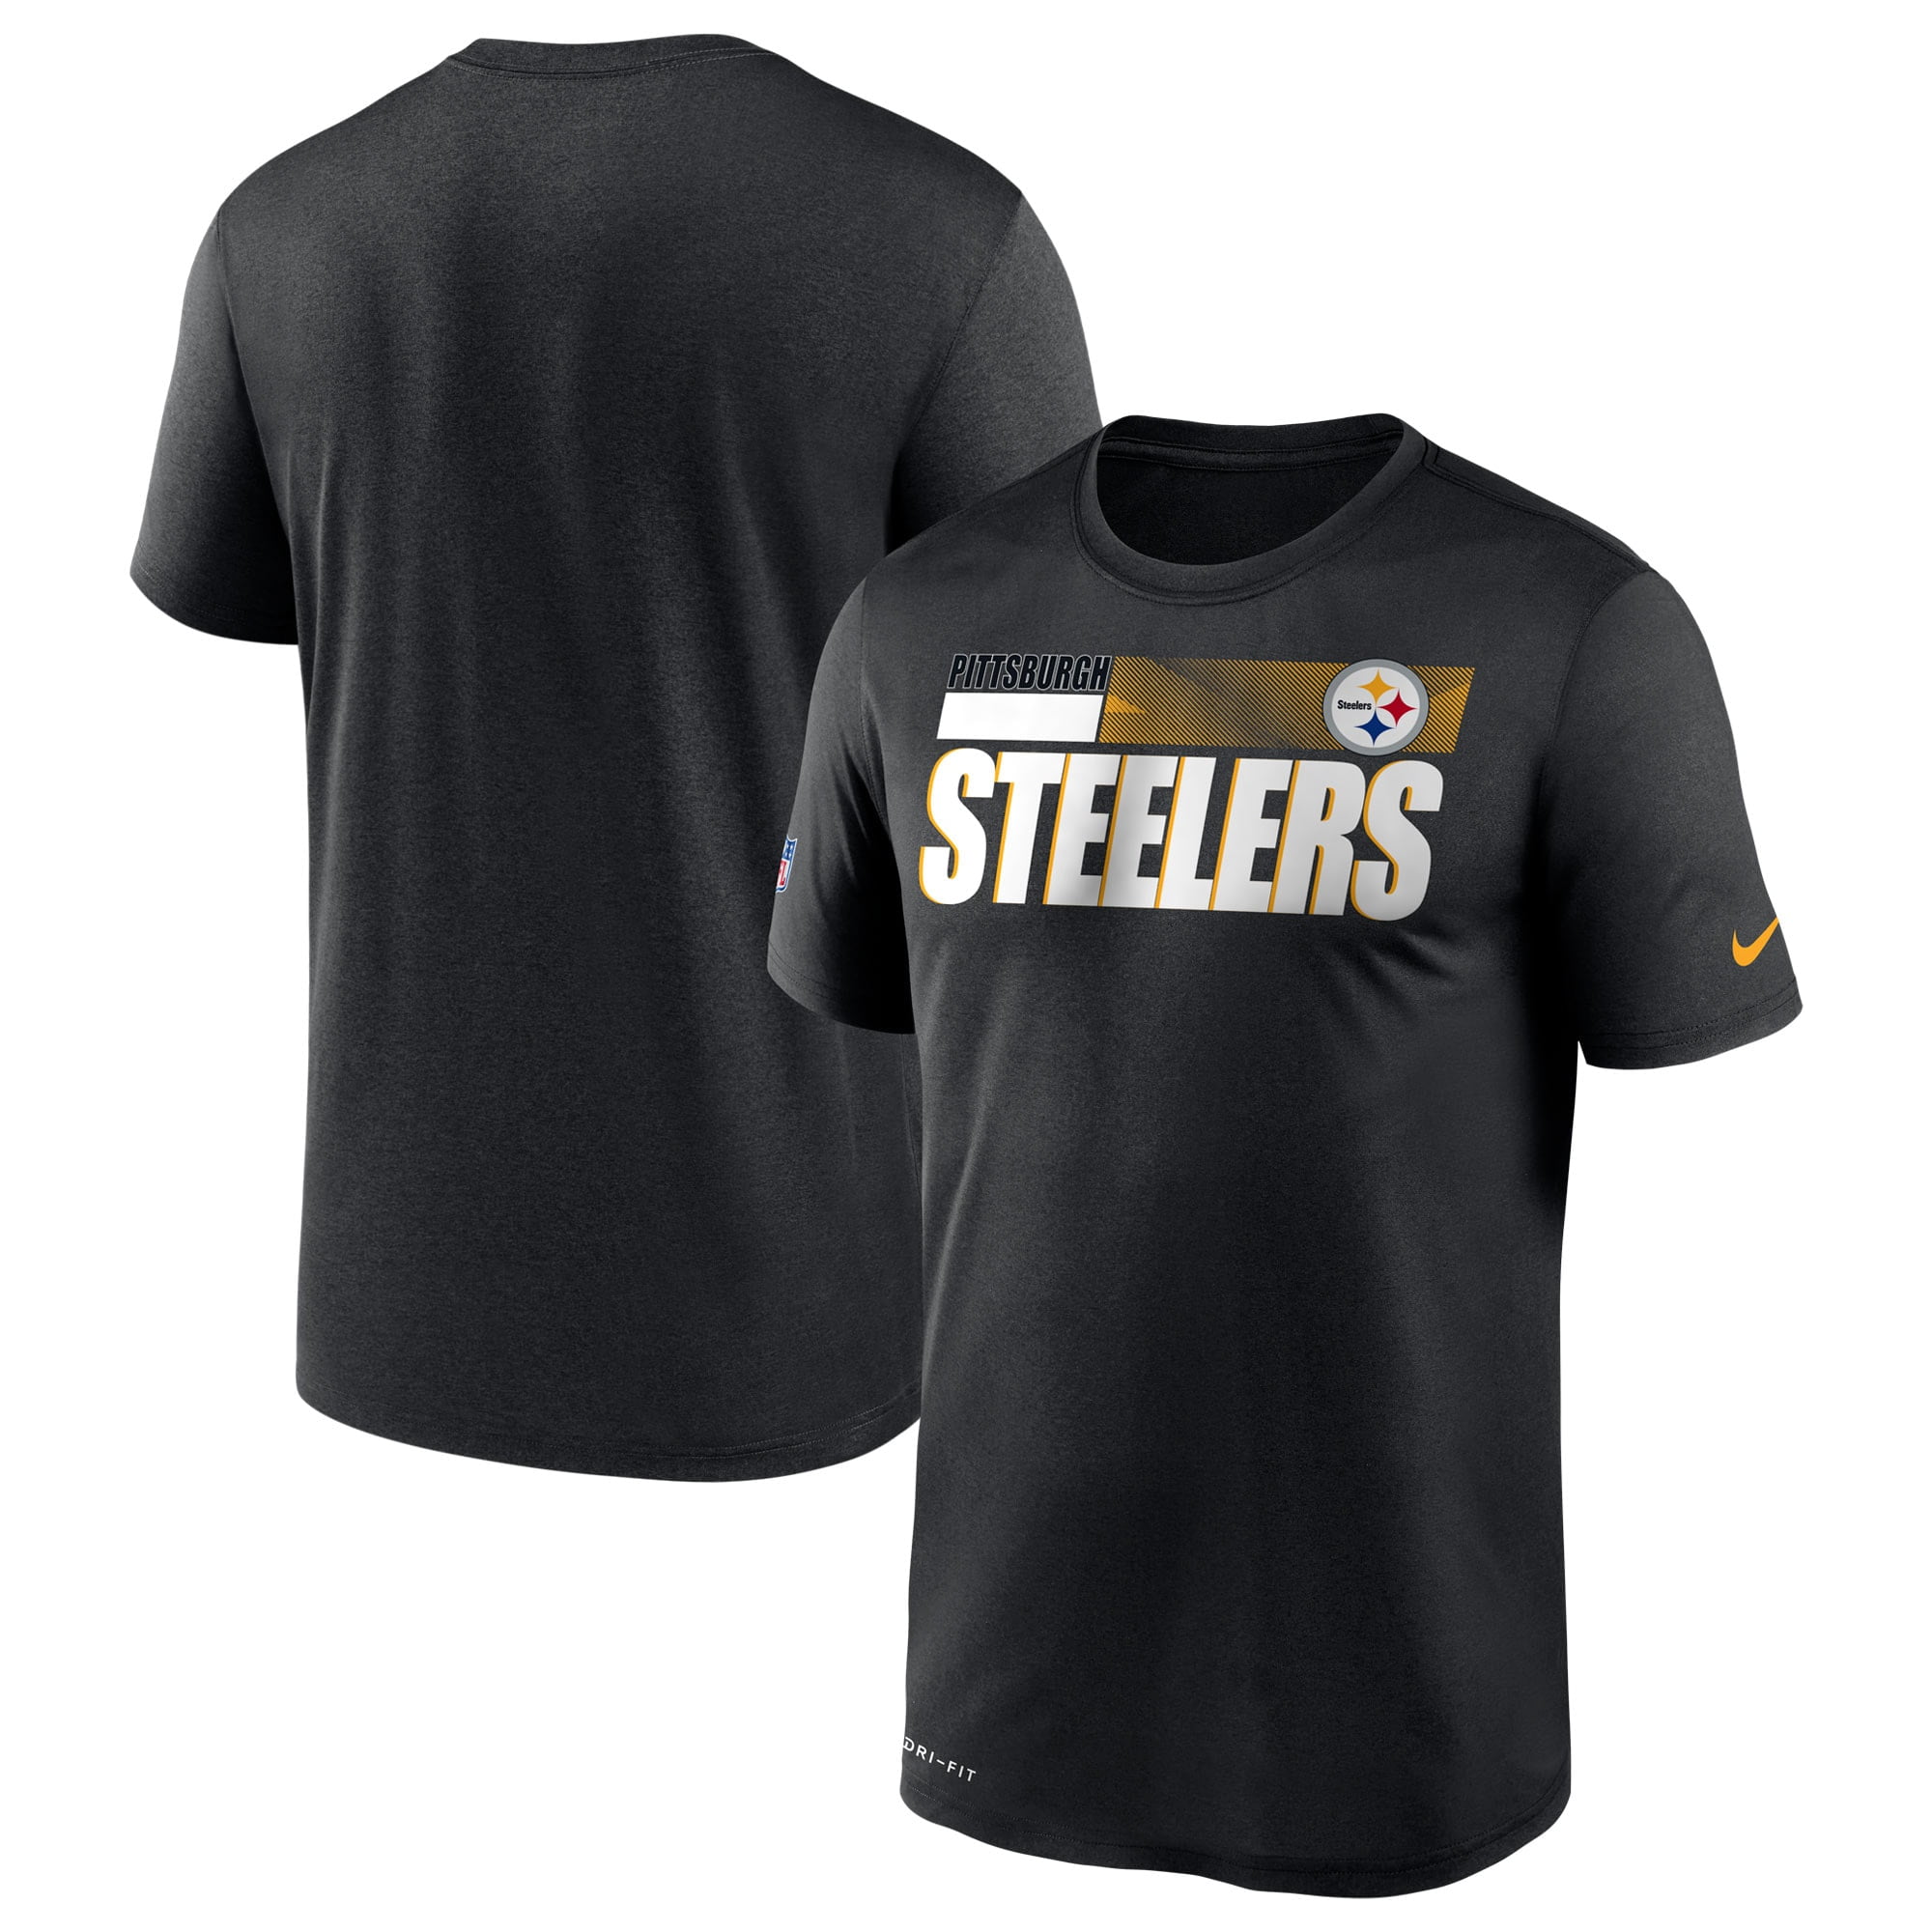 steelers sideline shirt